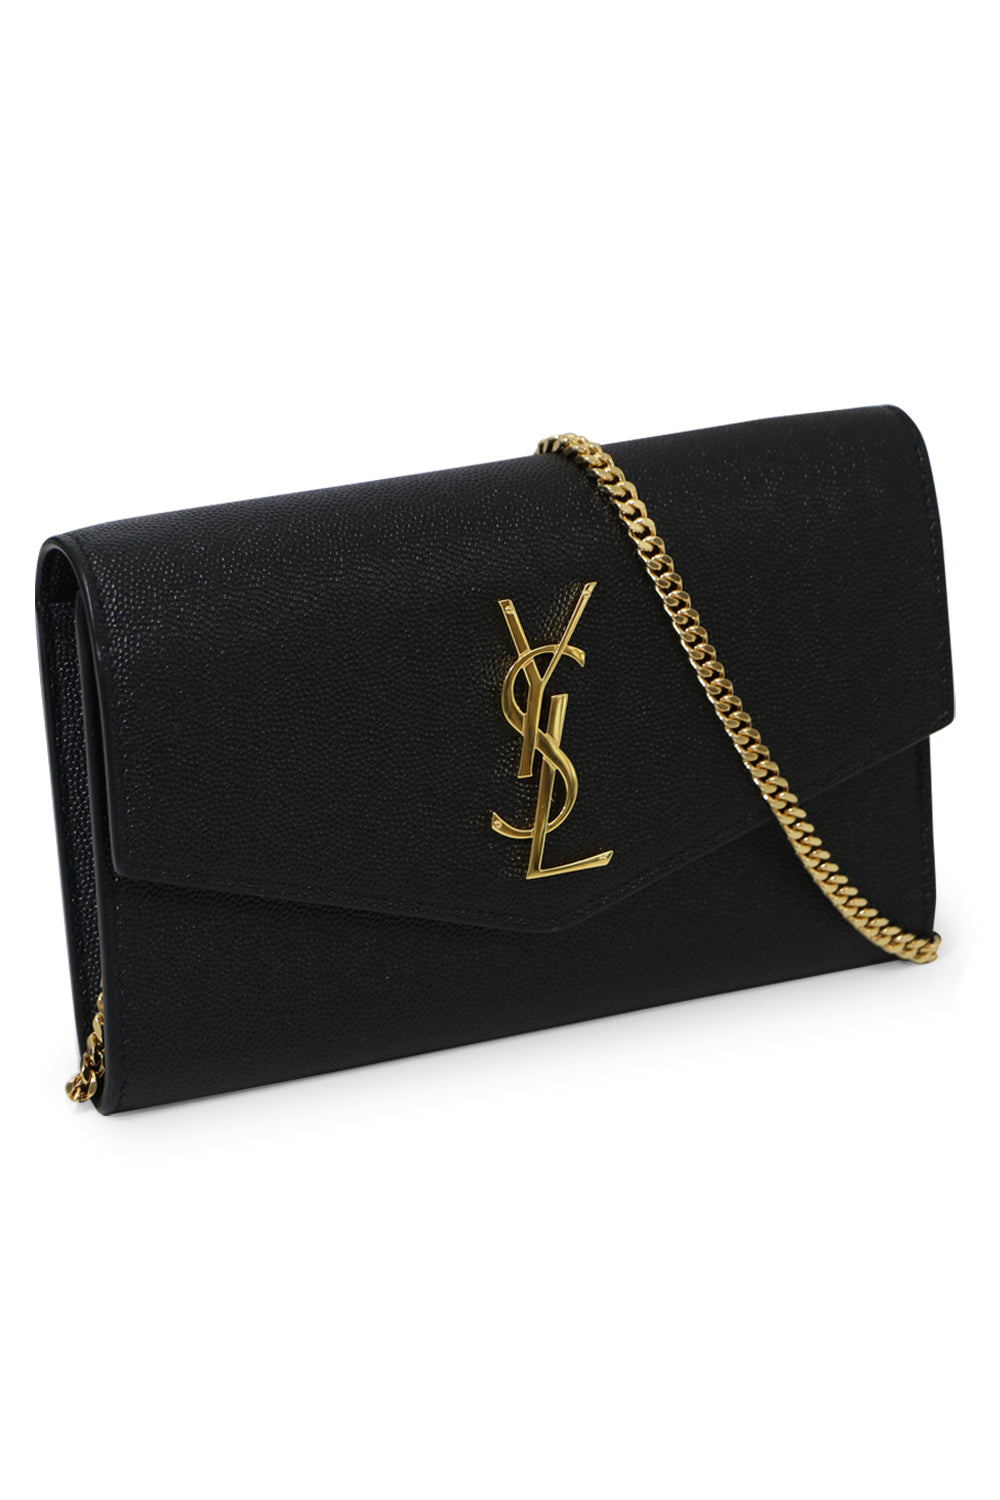 YSL Yves Saint Laurent beaute Crossbody gold Chain Purse black makeup  Clutch Bag – IBBY